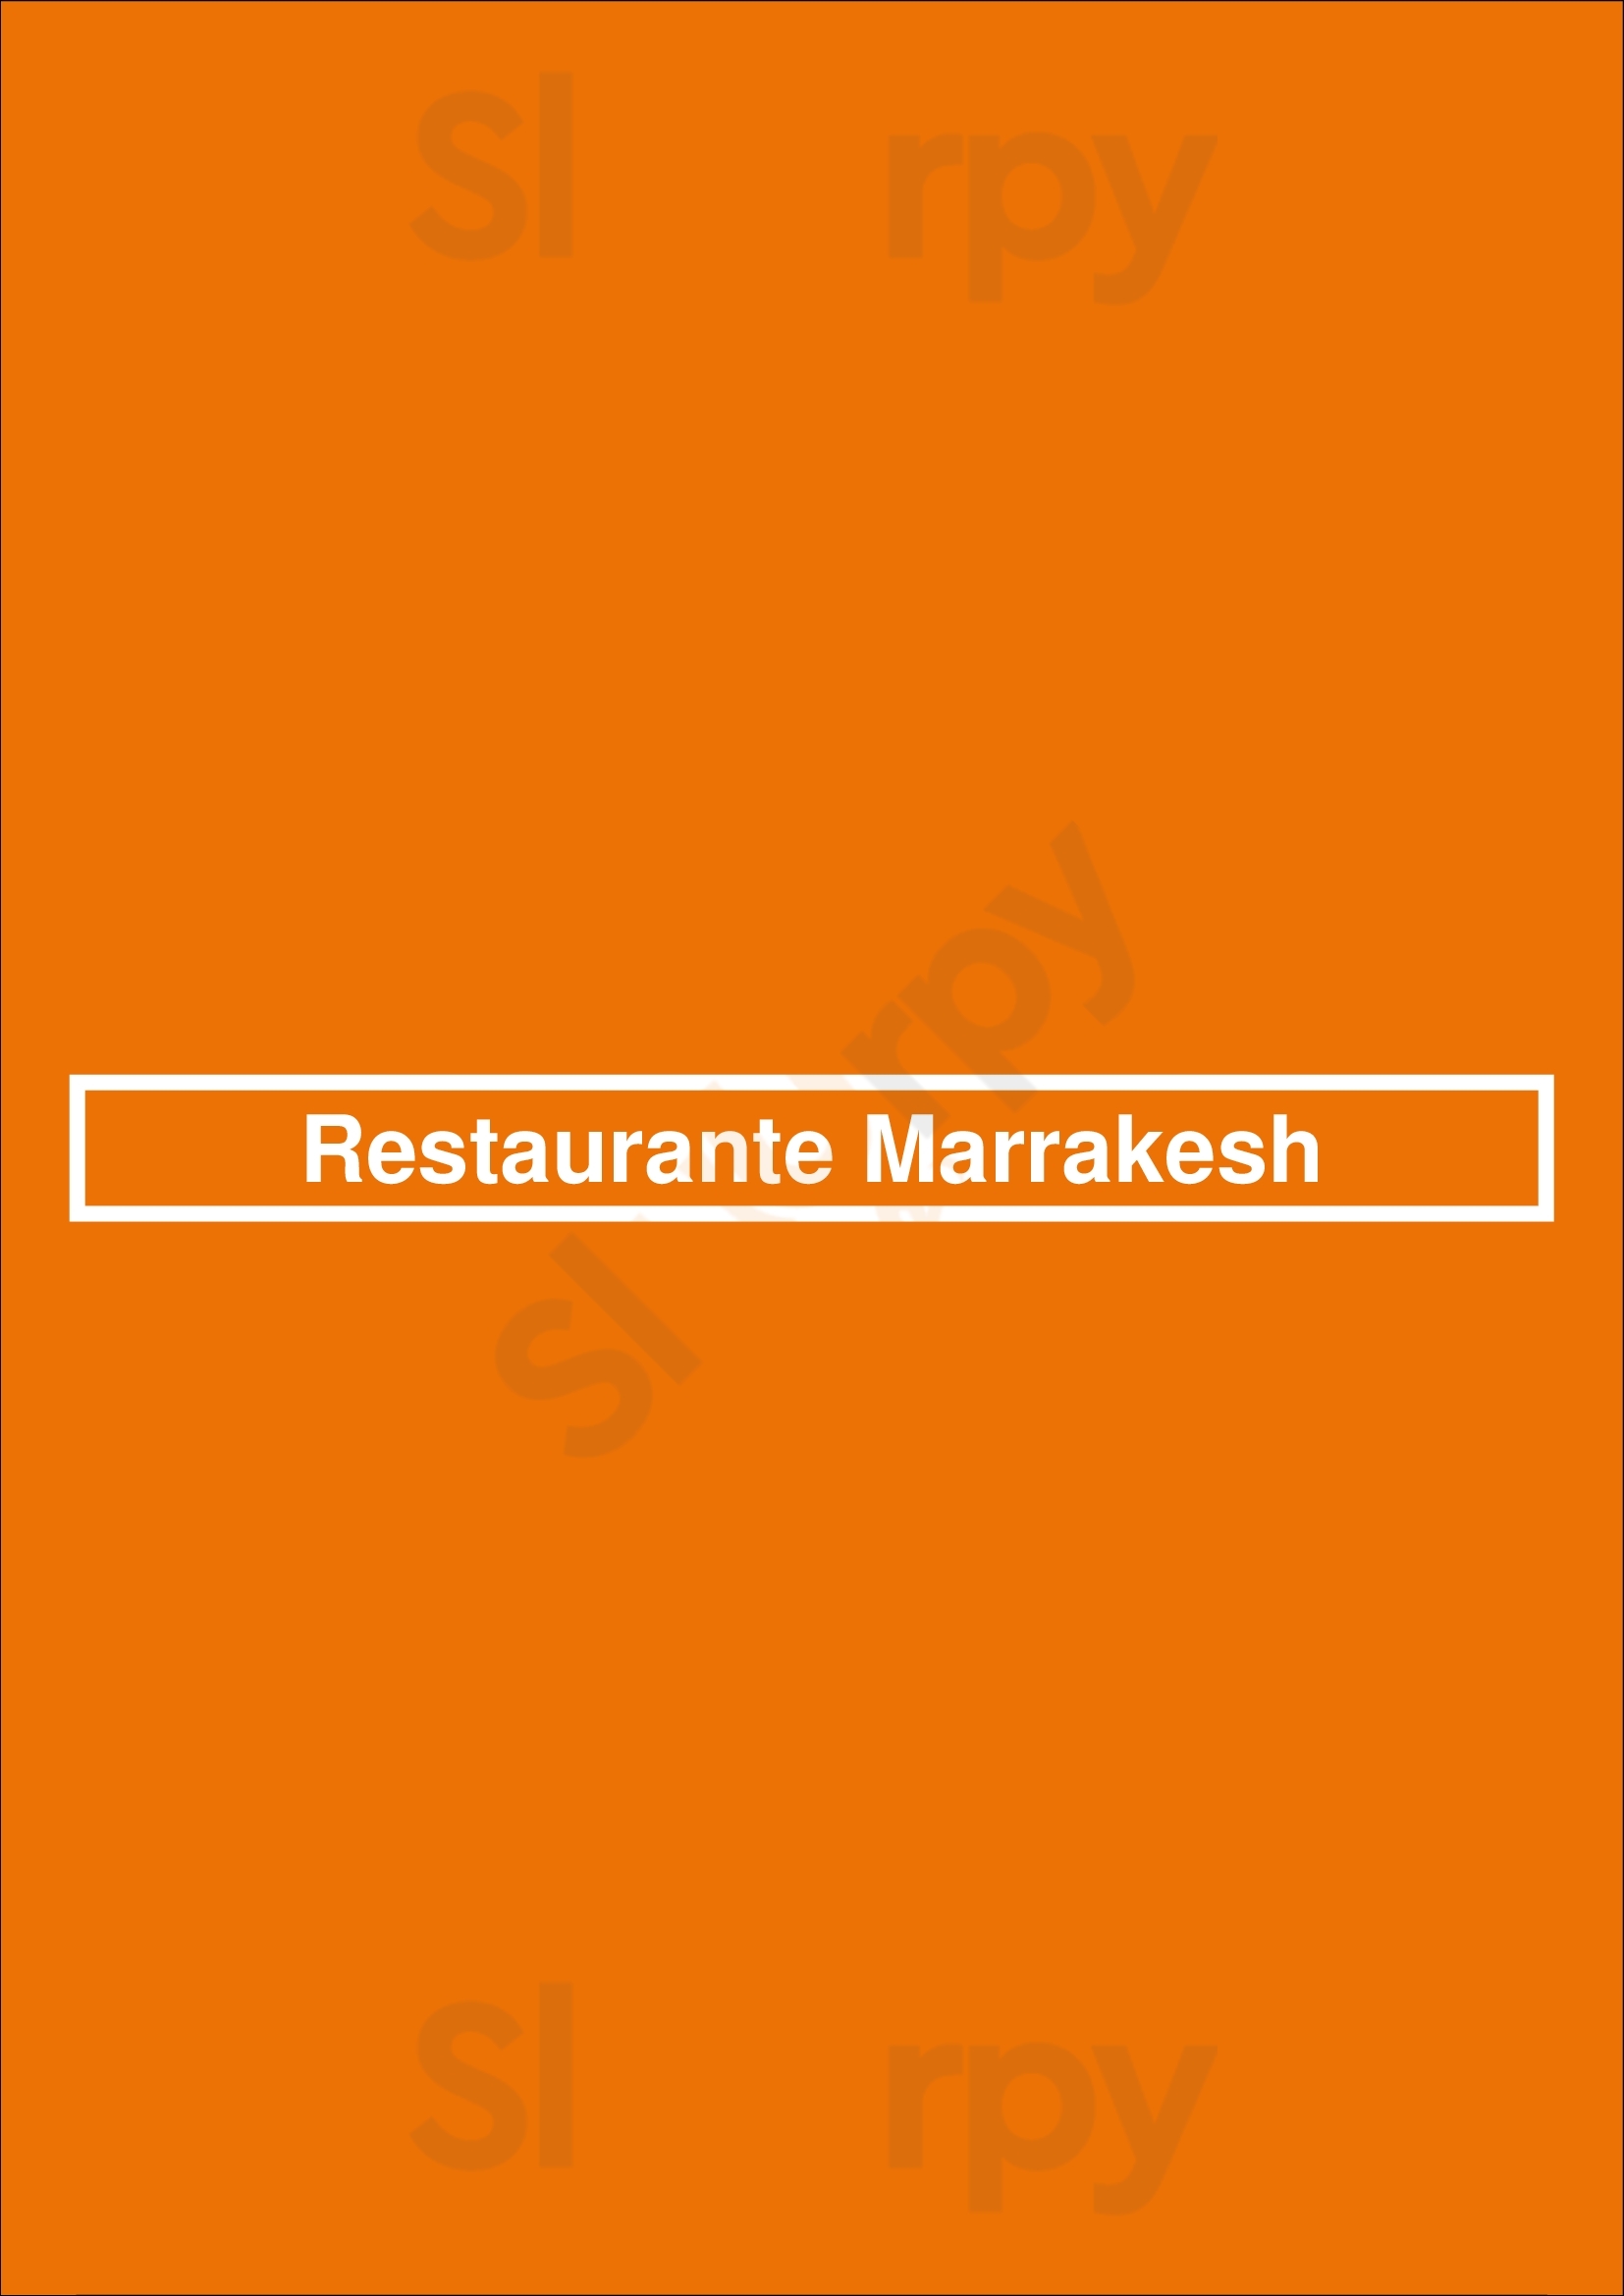 Restaurante Marrakesh Valencia Menu - 1